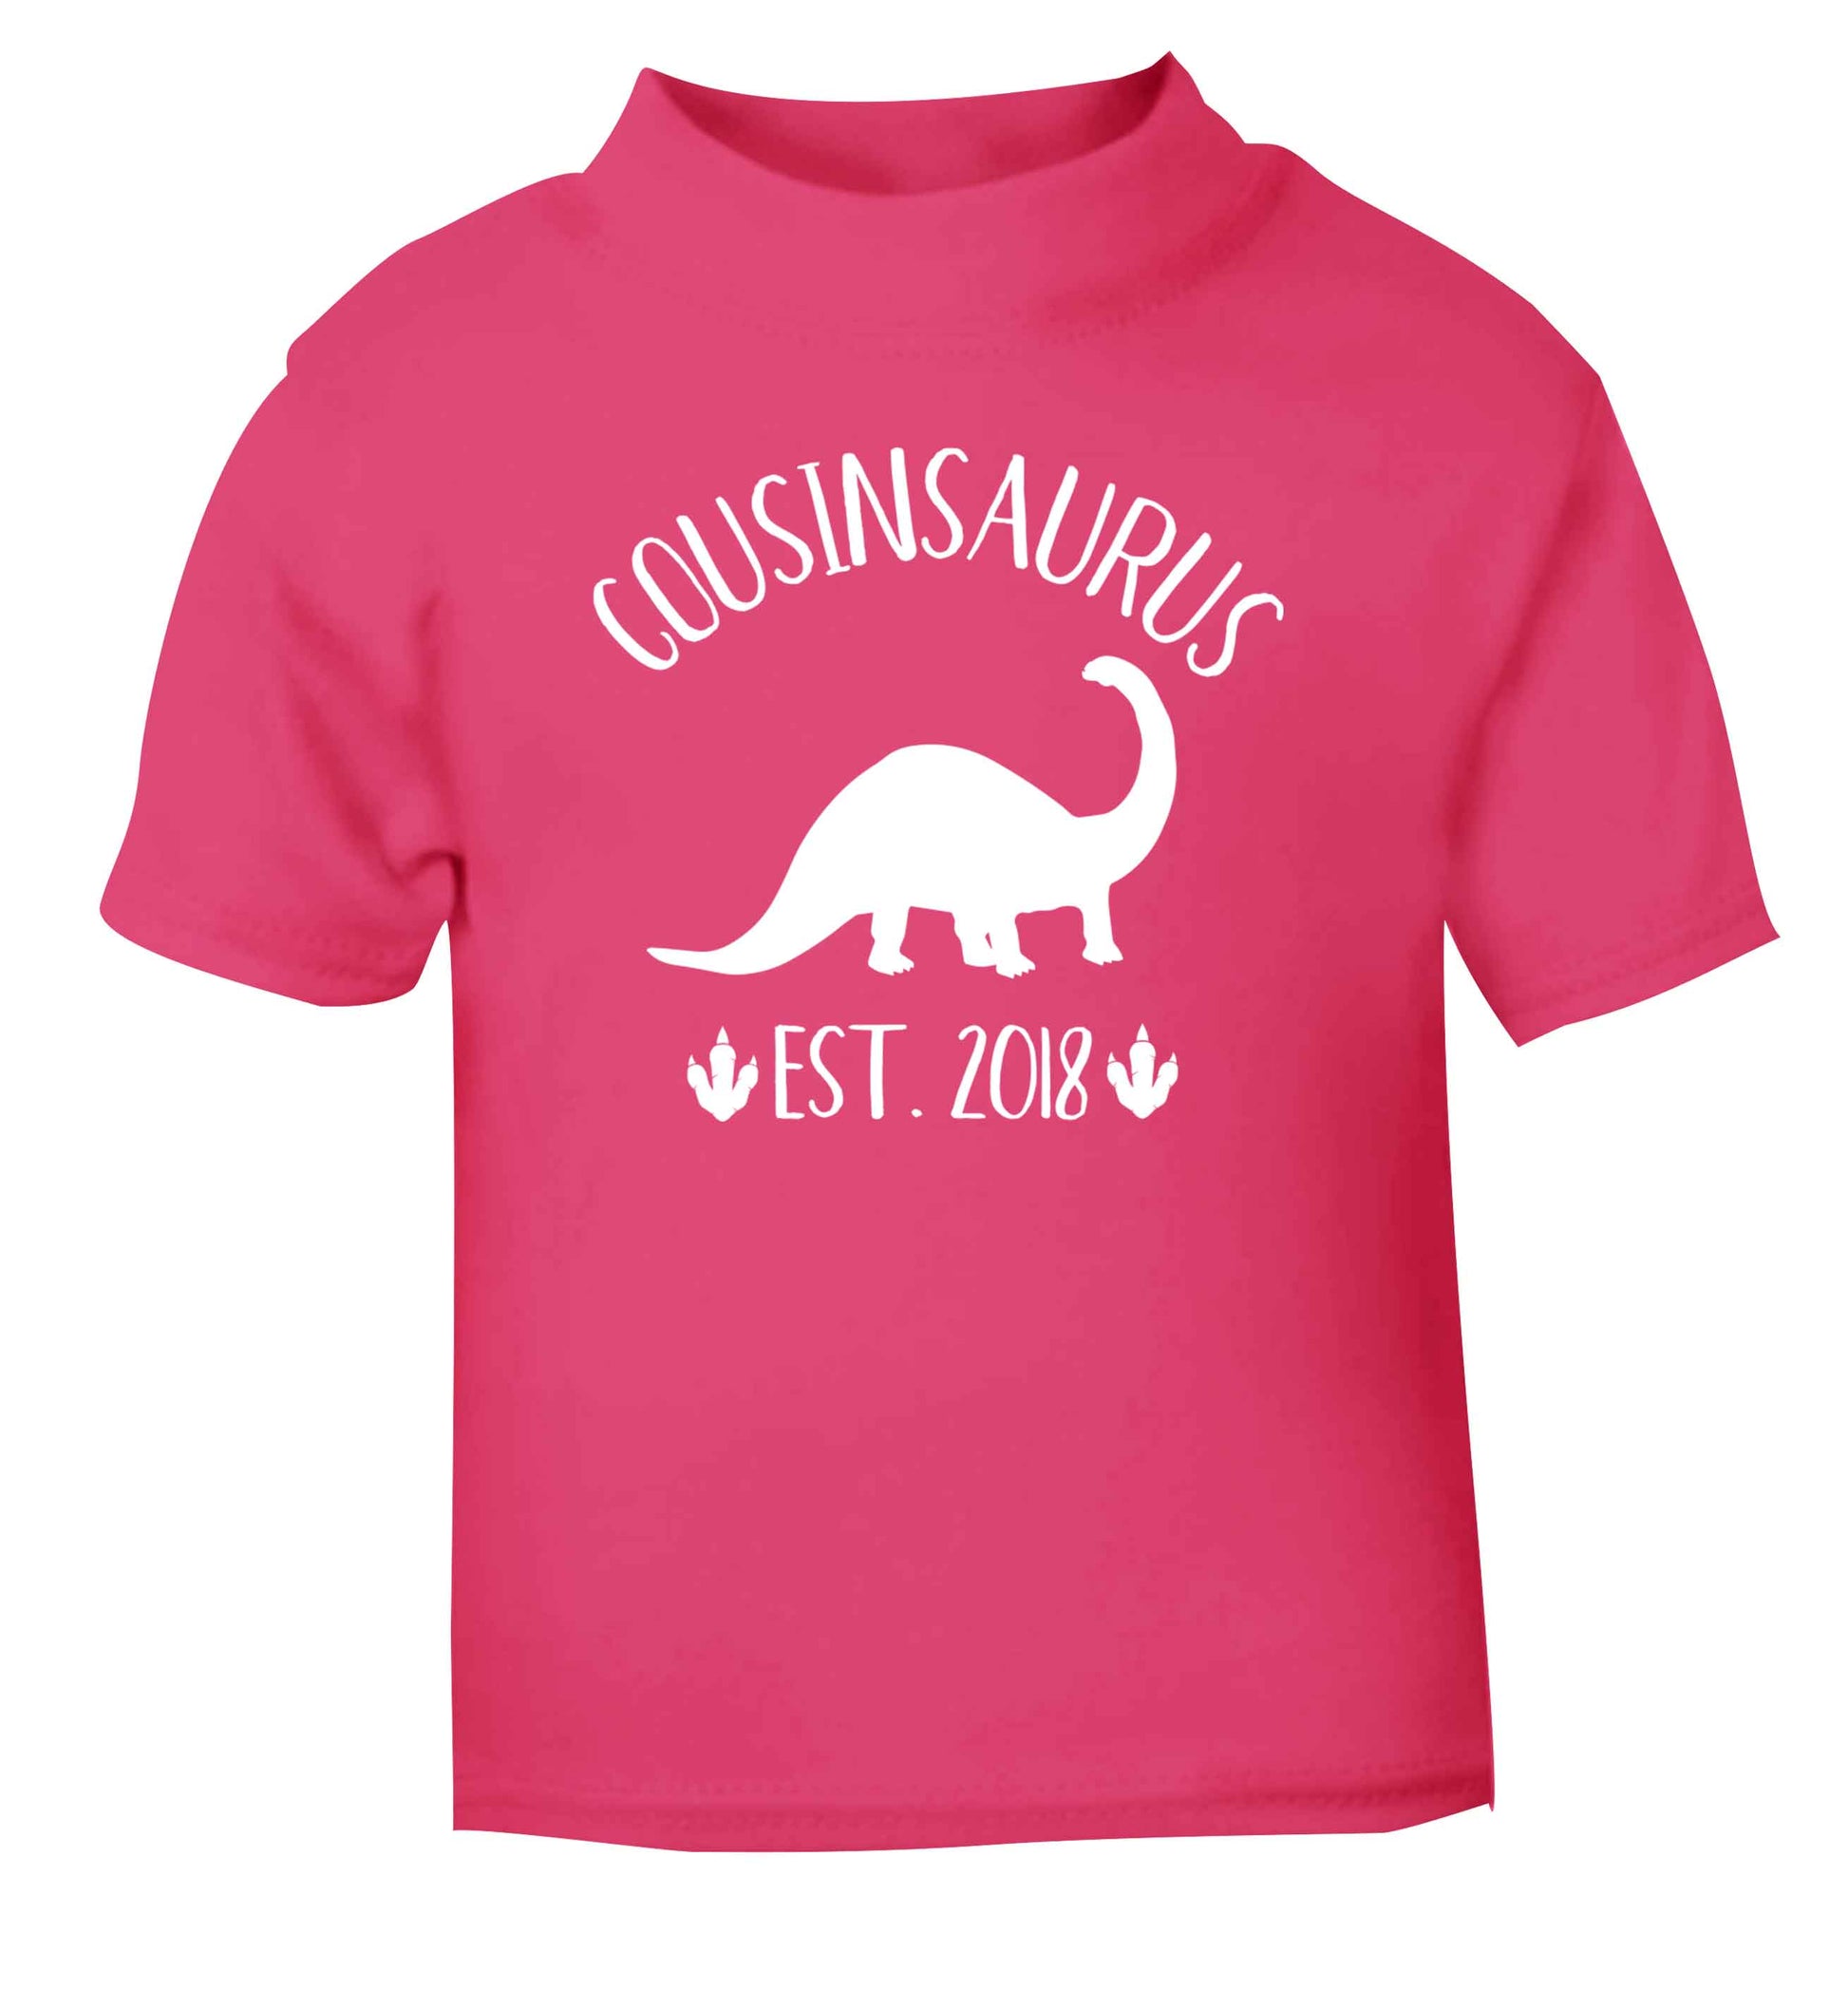 Personalised cousinsaurus since (custom date) pink Baby Toddler Tshirt 2 Years